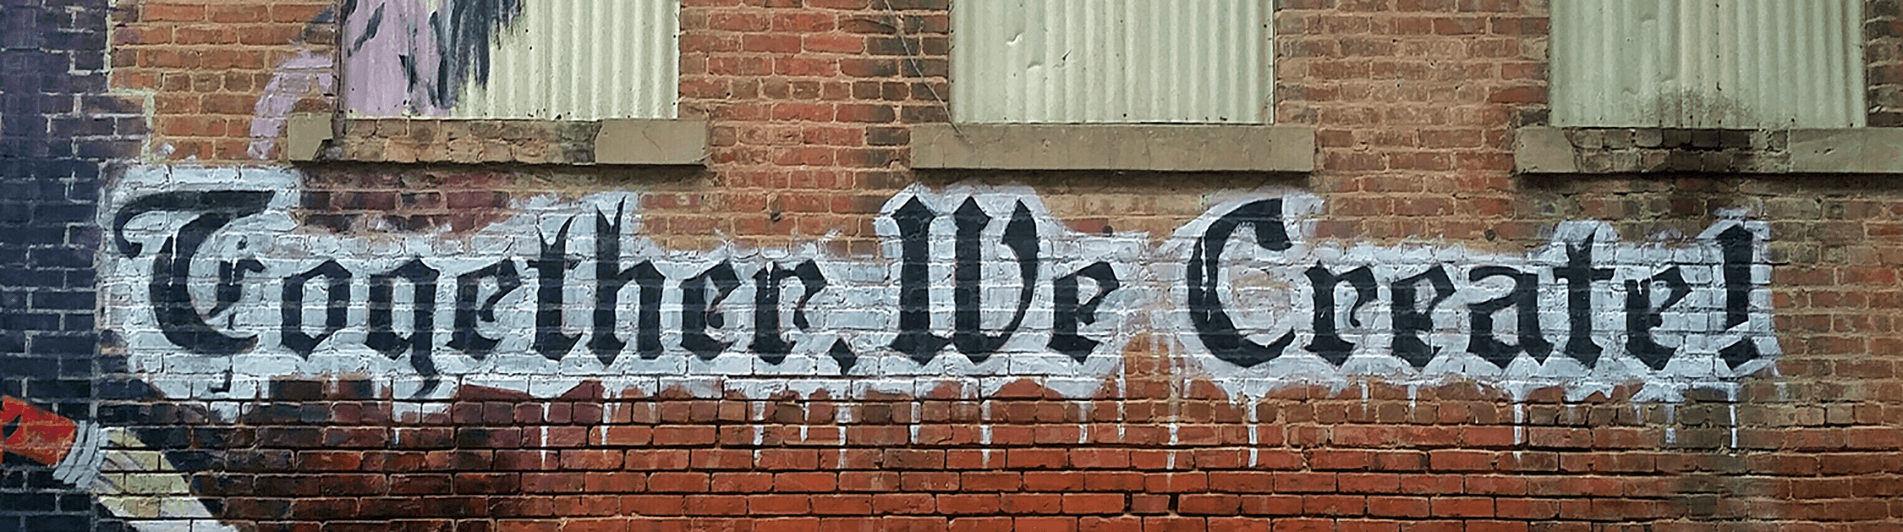 "Together, We Create!" graffiti image